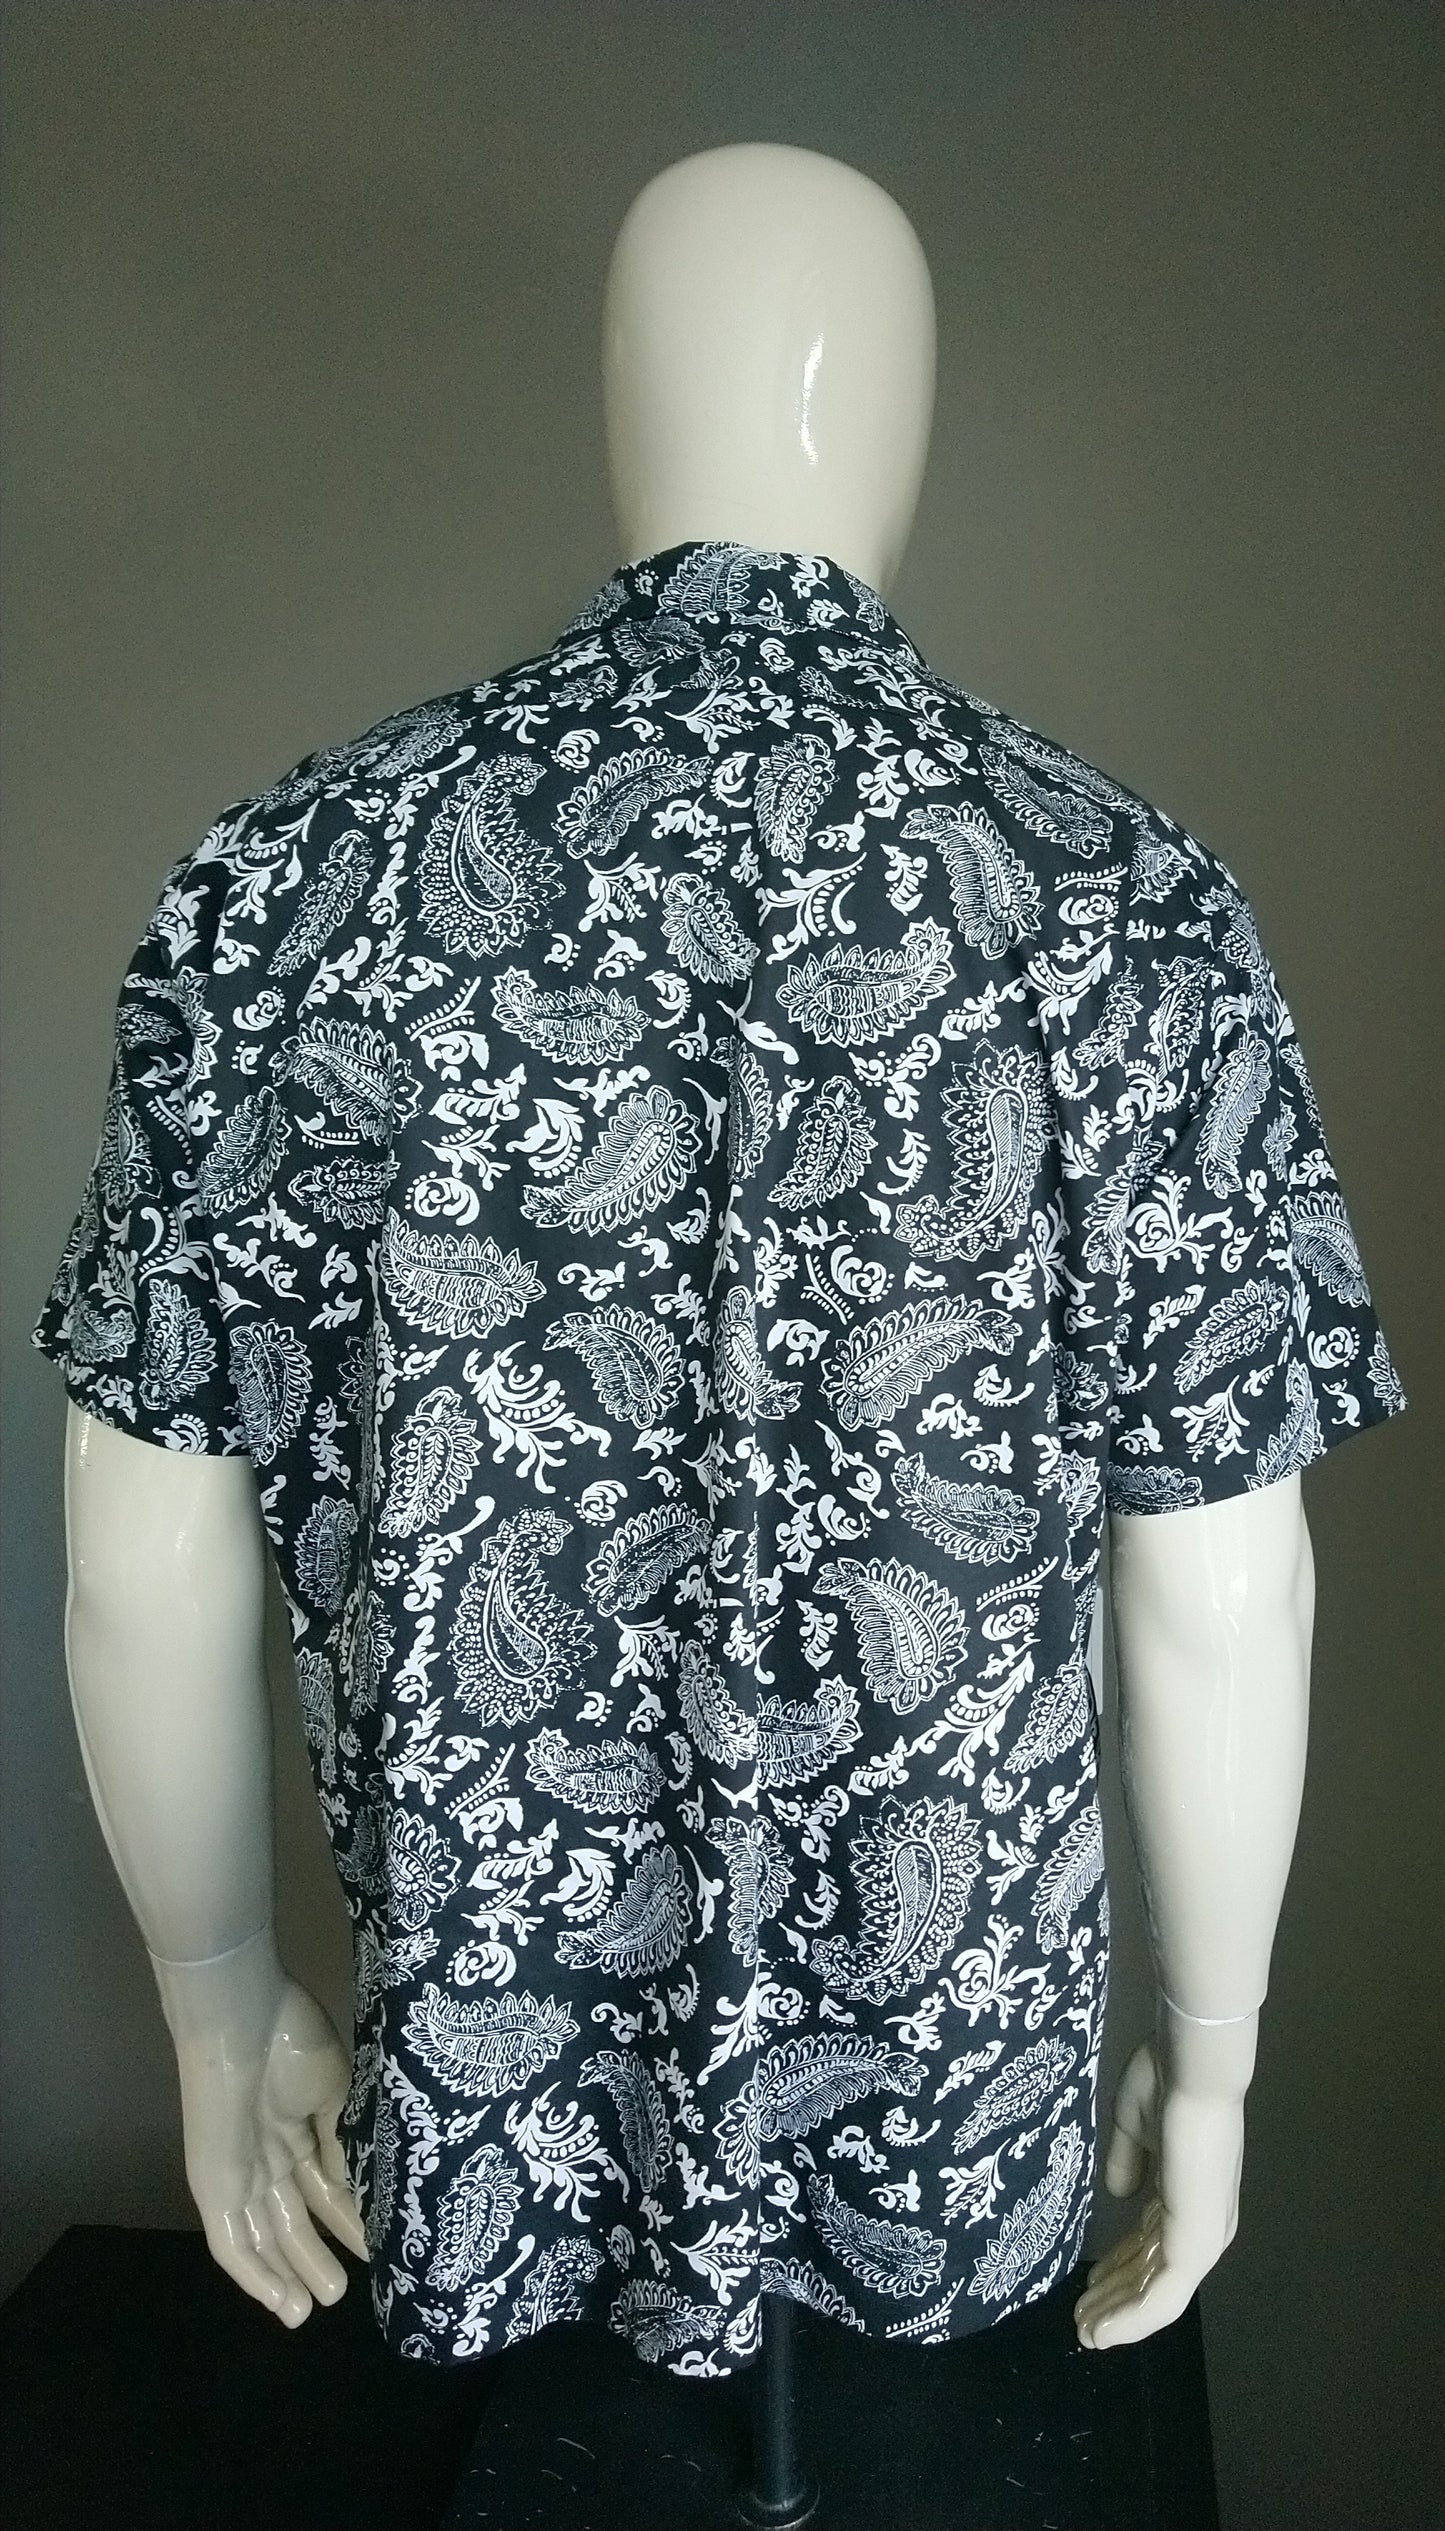 Replay Print Shirt Short Sleeve. Impression en paisley noir et blanc. Taille xl.